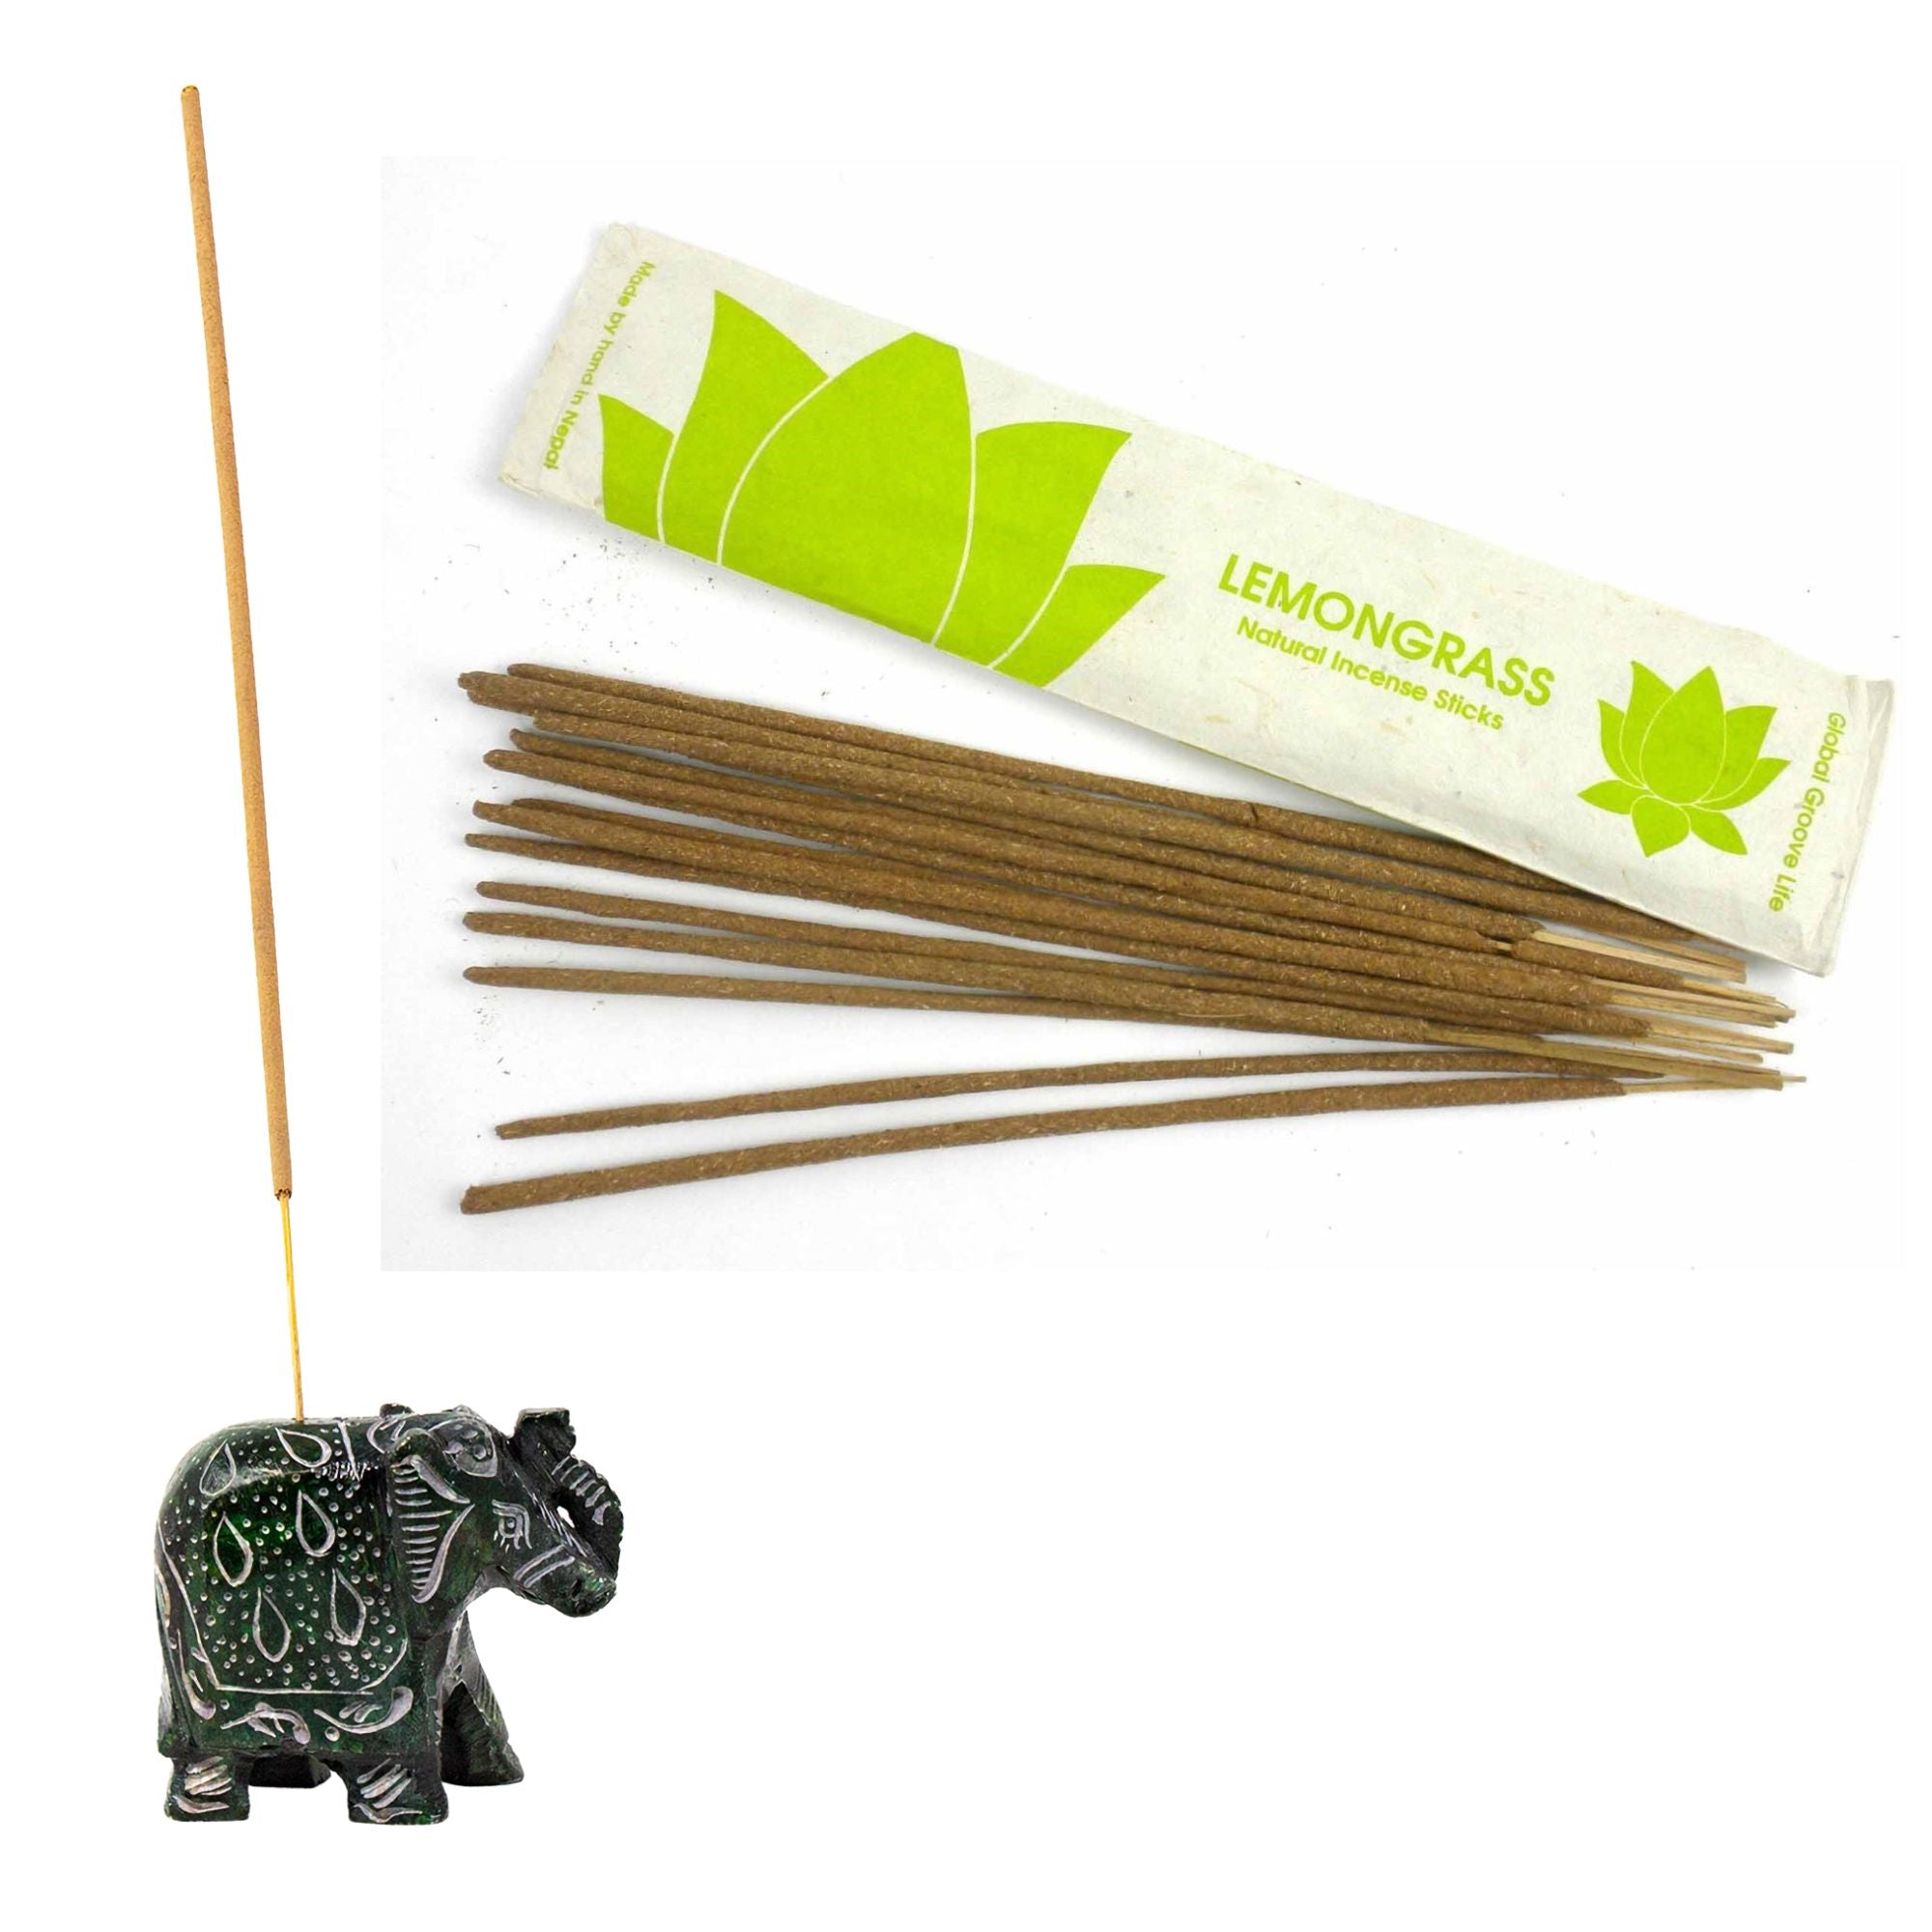 Handmade Elephant Soapstone Incense Holder with Lemongrass Stick Incense